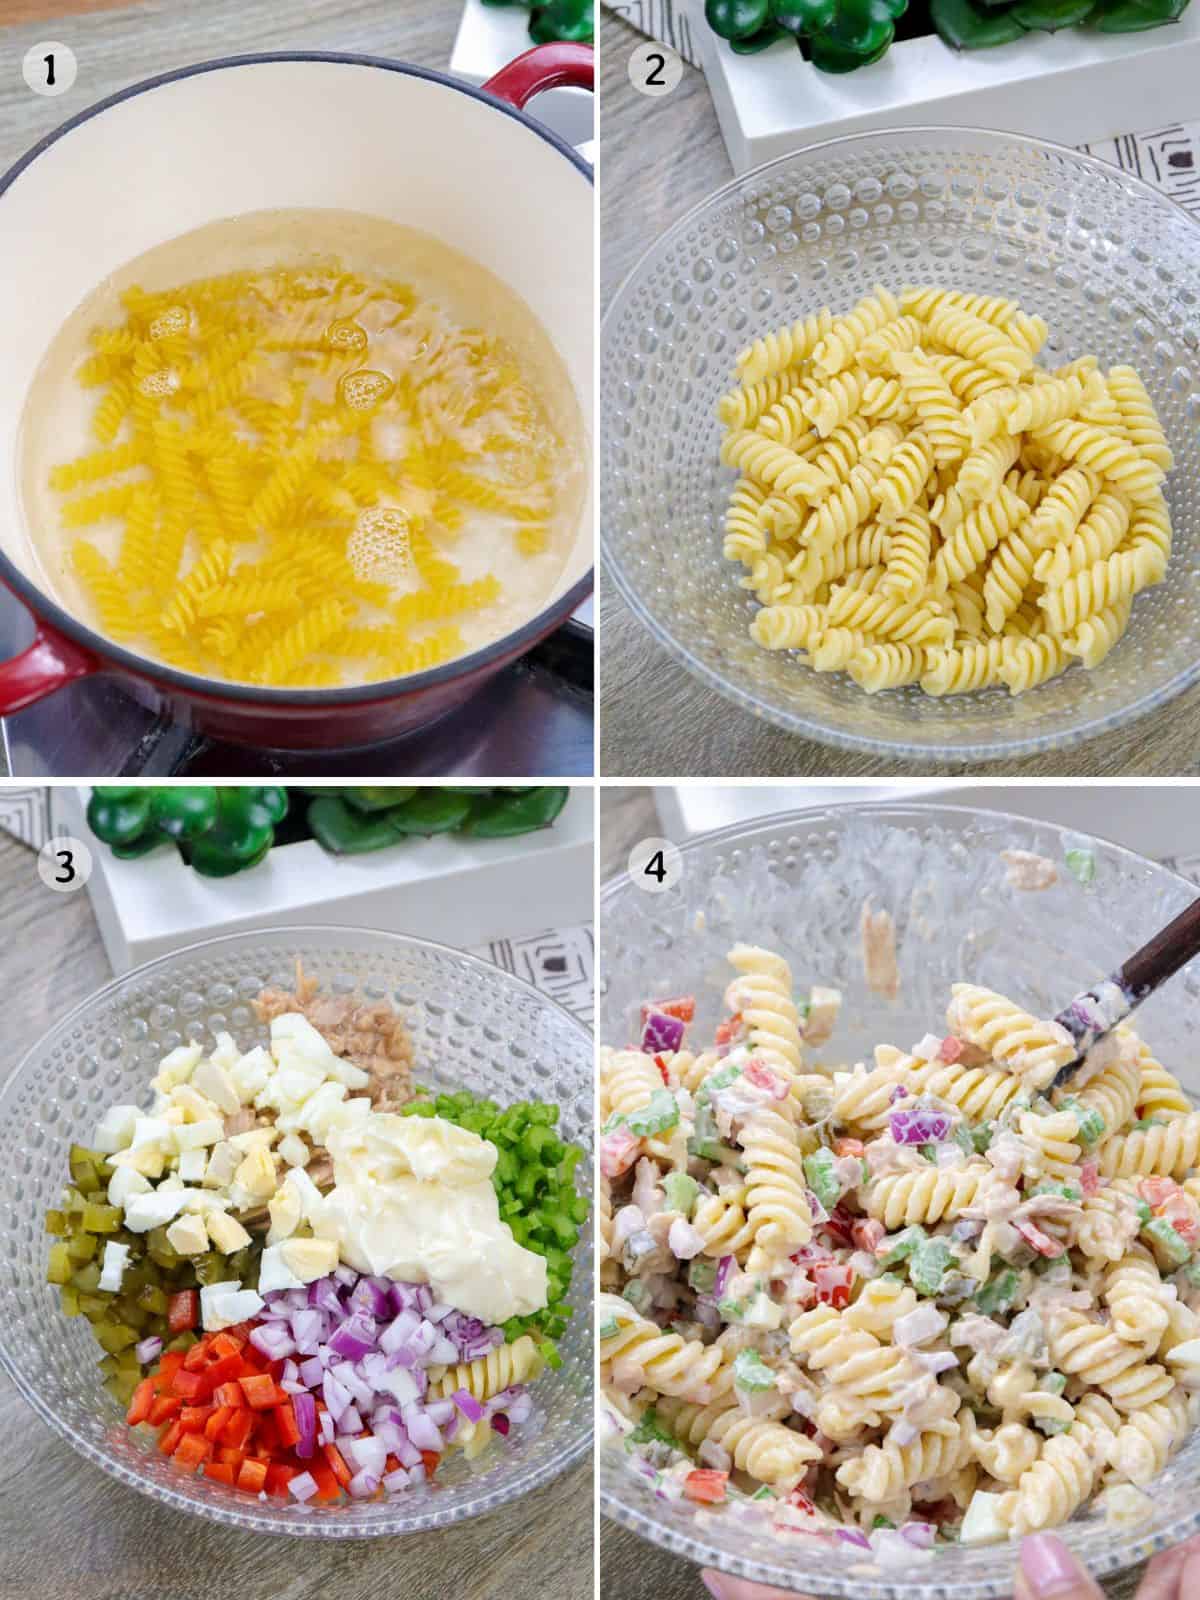 making tuna pasta salad in a bowl.